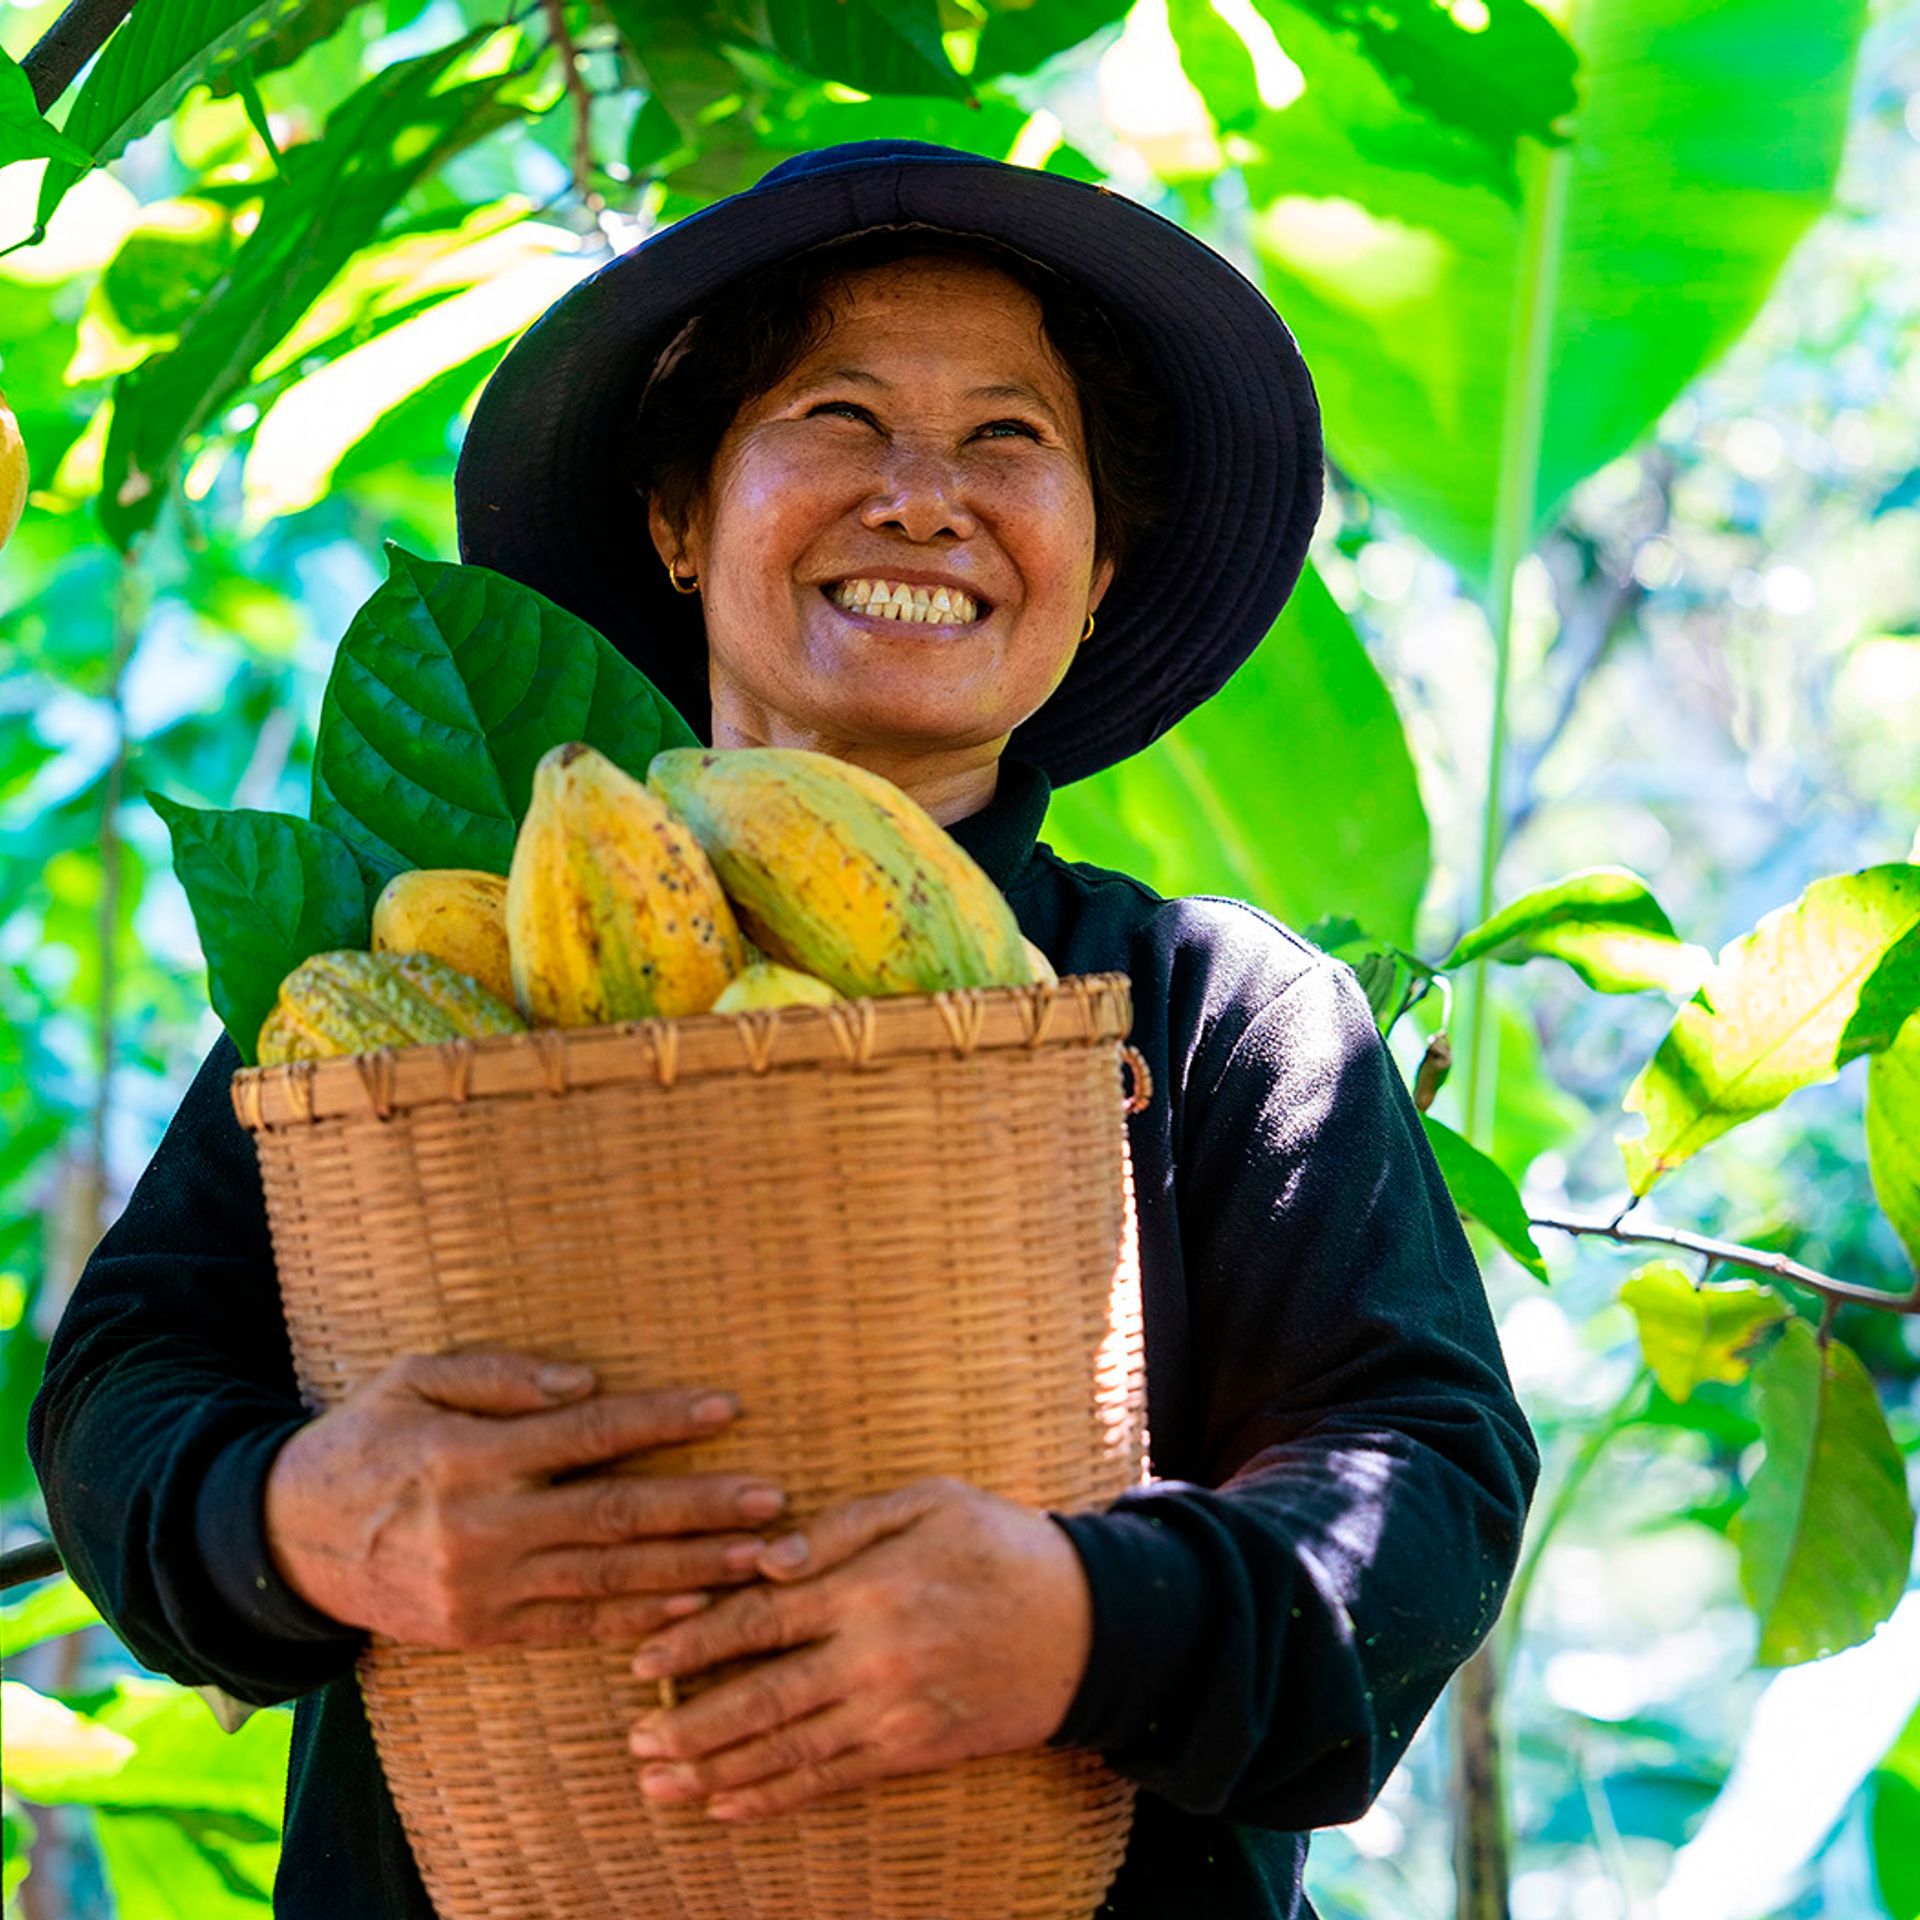 Image of a producer harvesting fruit